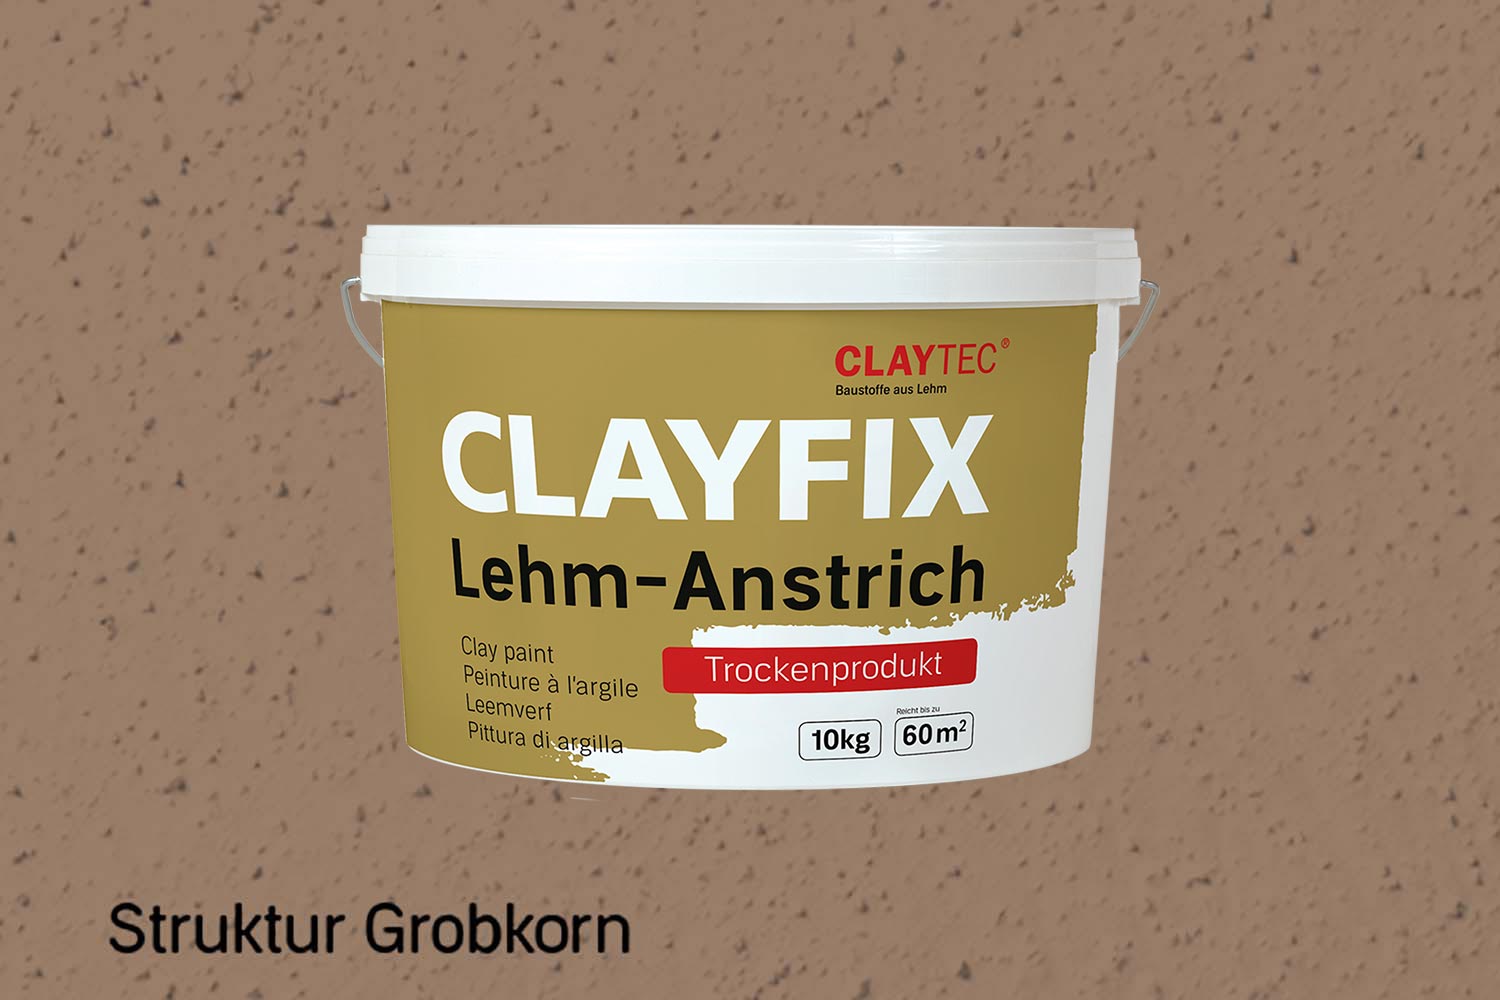 Claytec Clayfix Lehm-Anstrich Grobkorn